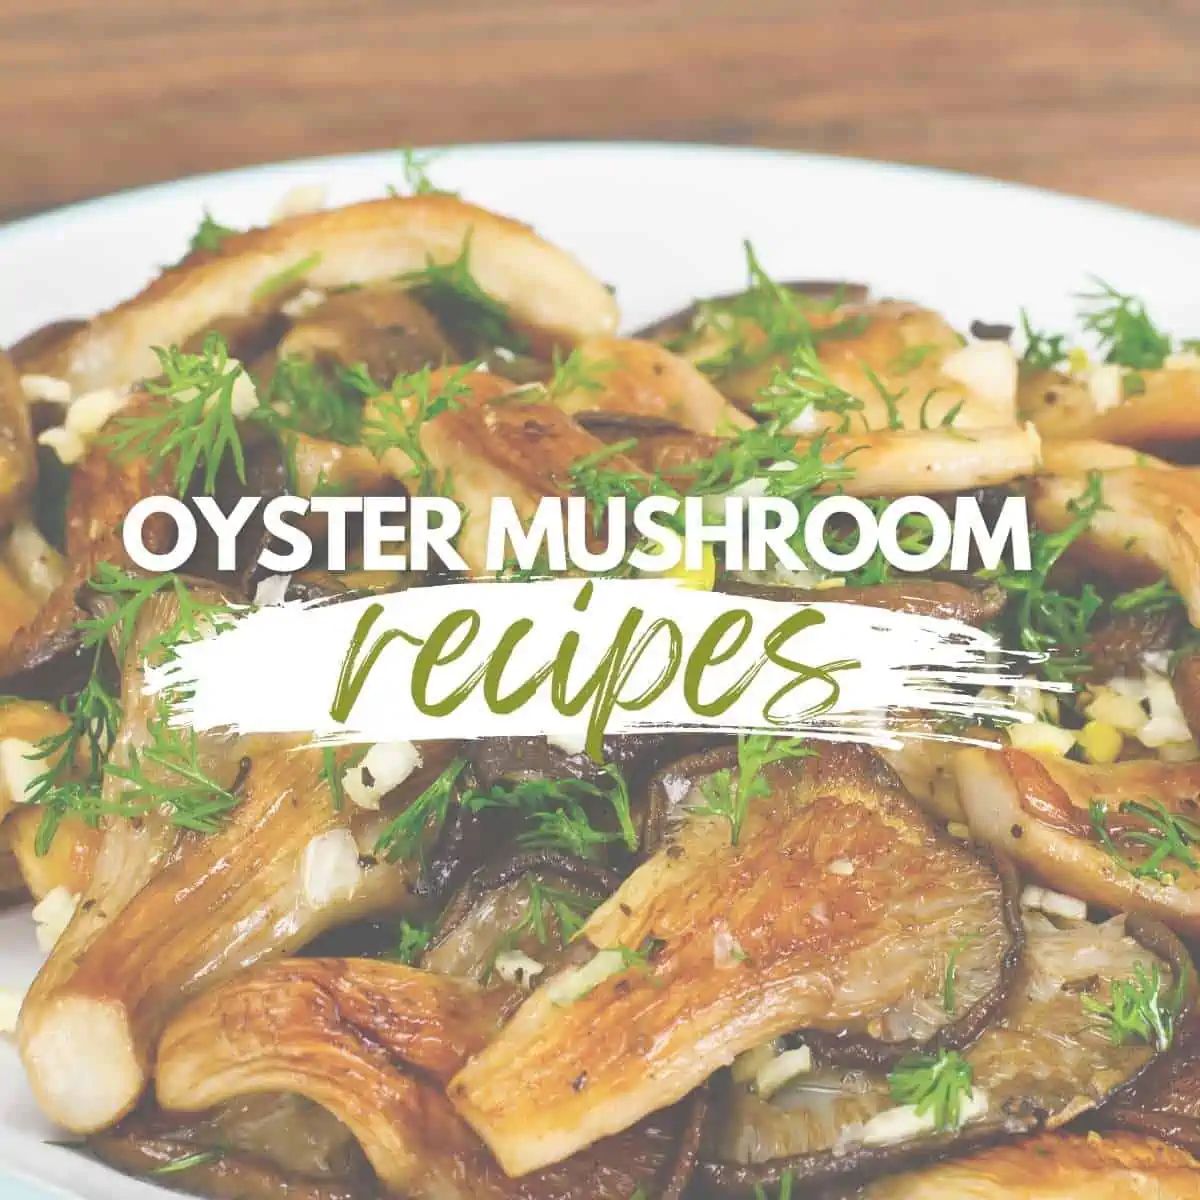 25 Amazing Oyster Mushroom Recipe Ideas to Try